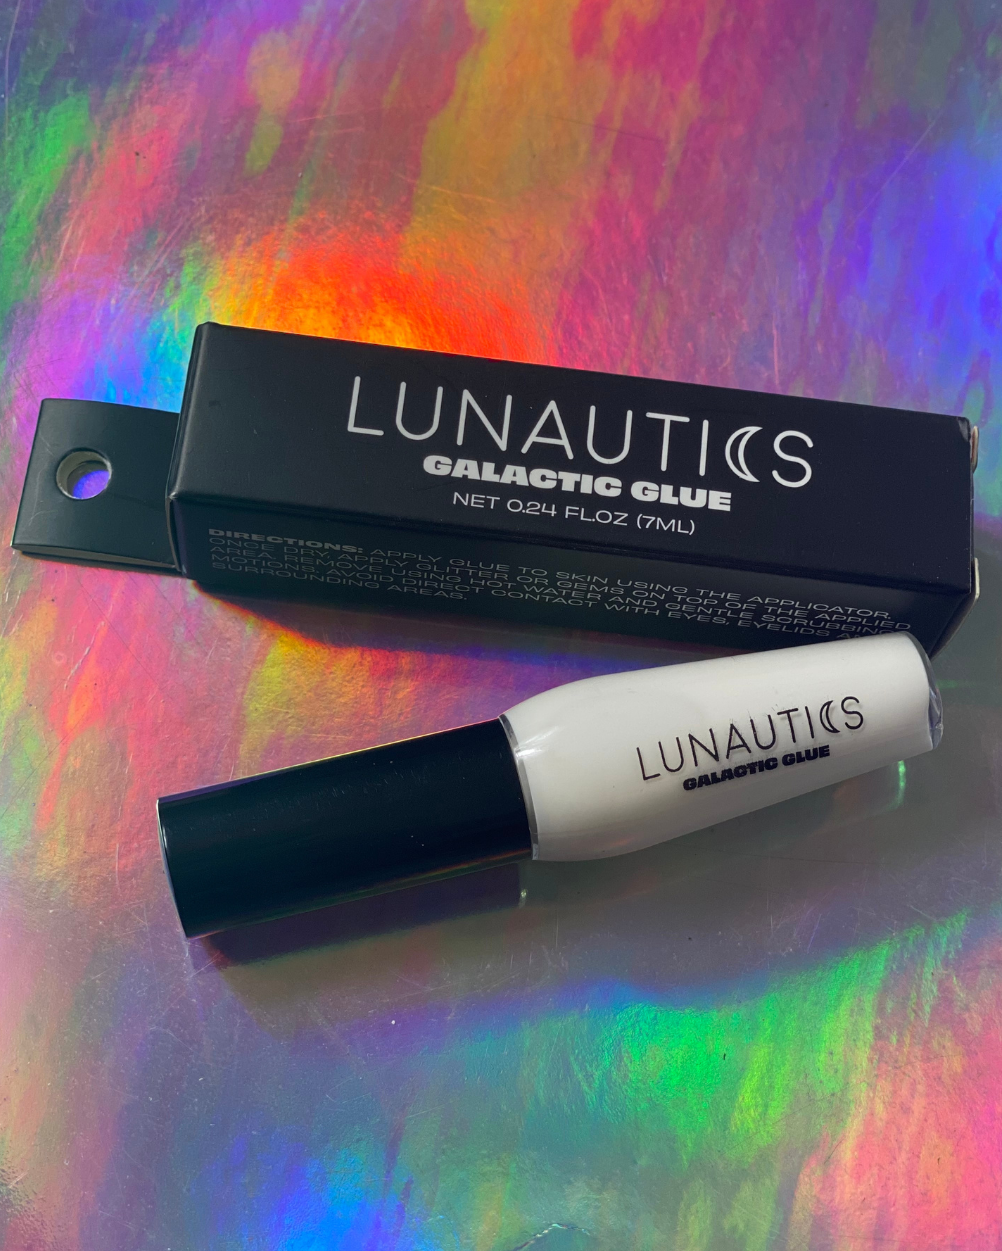 Waterproof Galactic Glitter Glue - Lunautics Adhesive